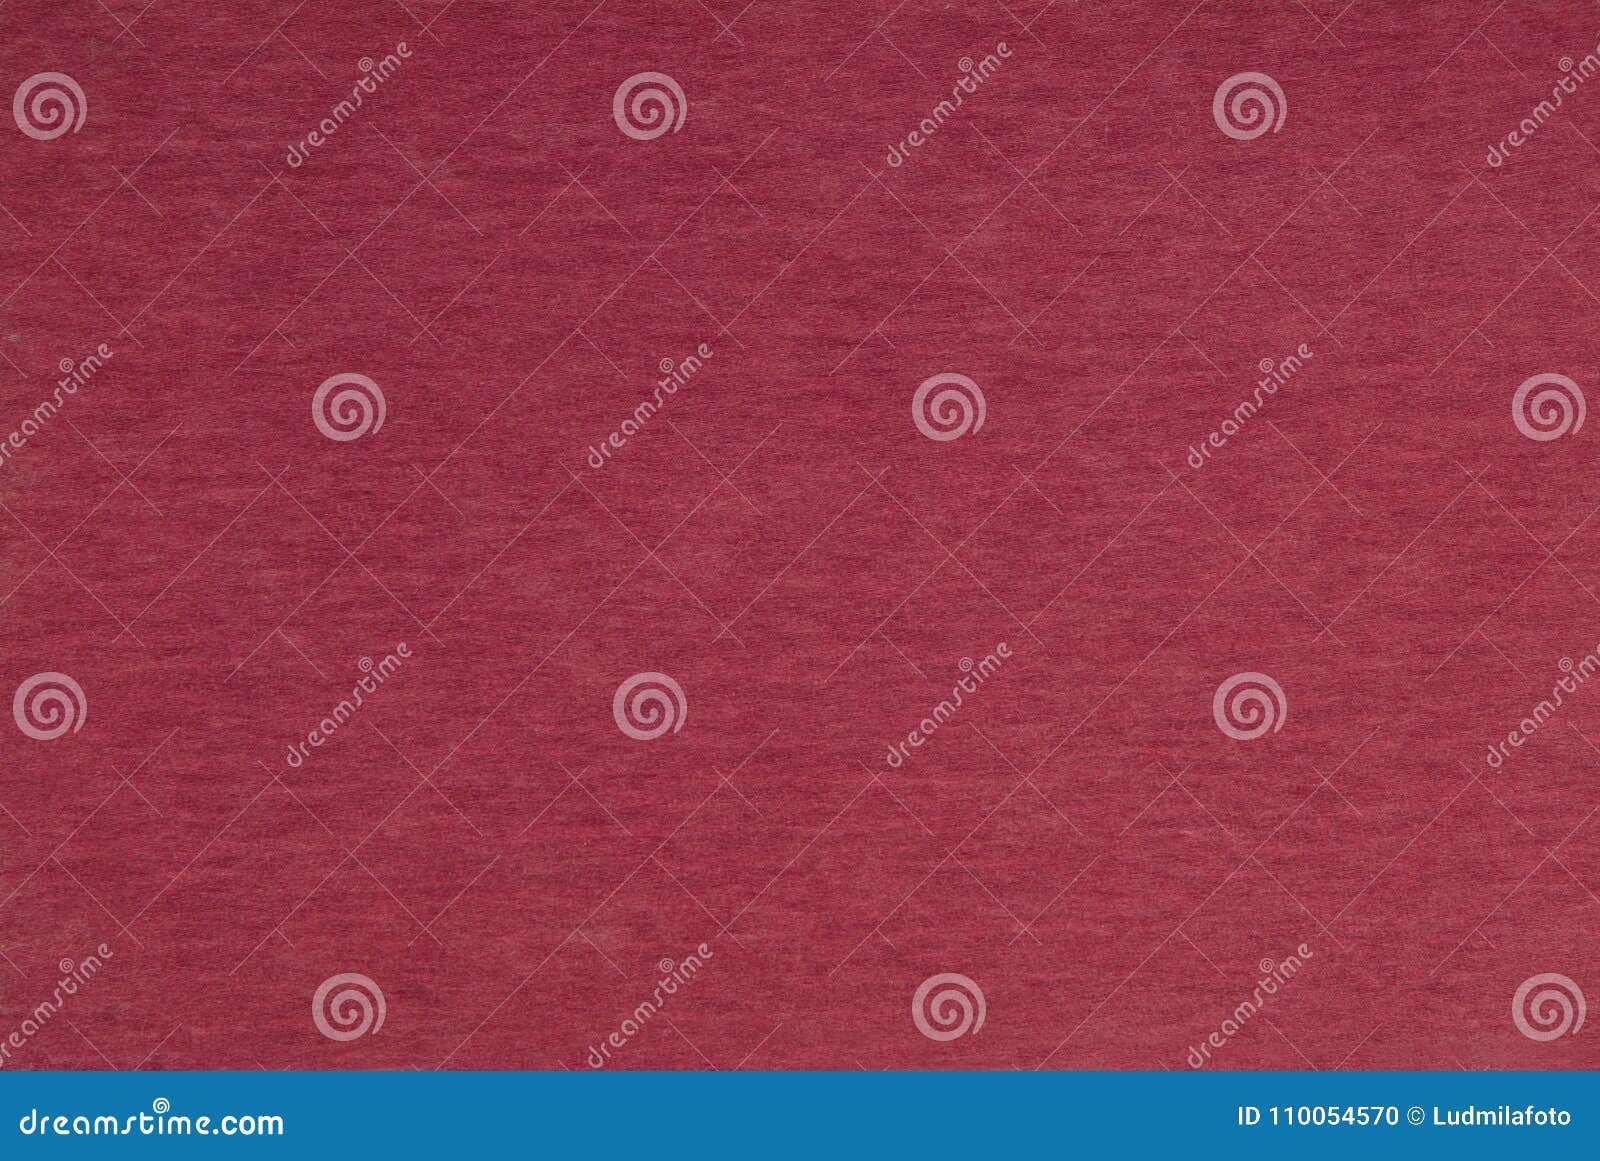 abstract maroon background, dark red, backdrop, crimson textu